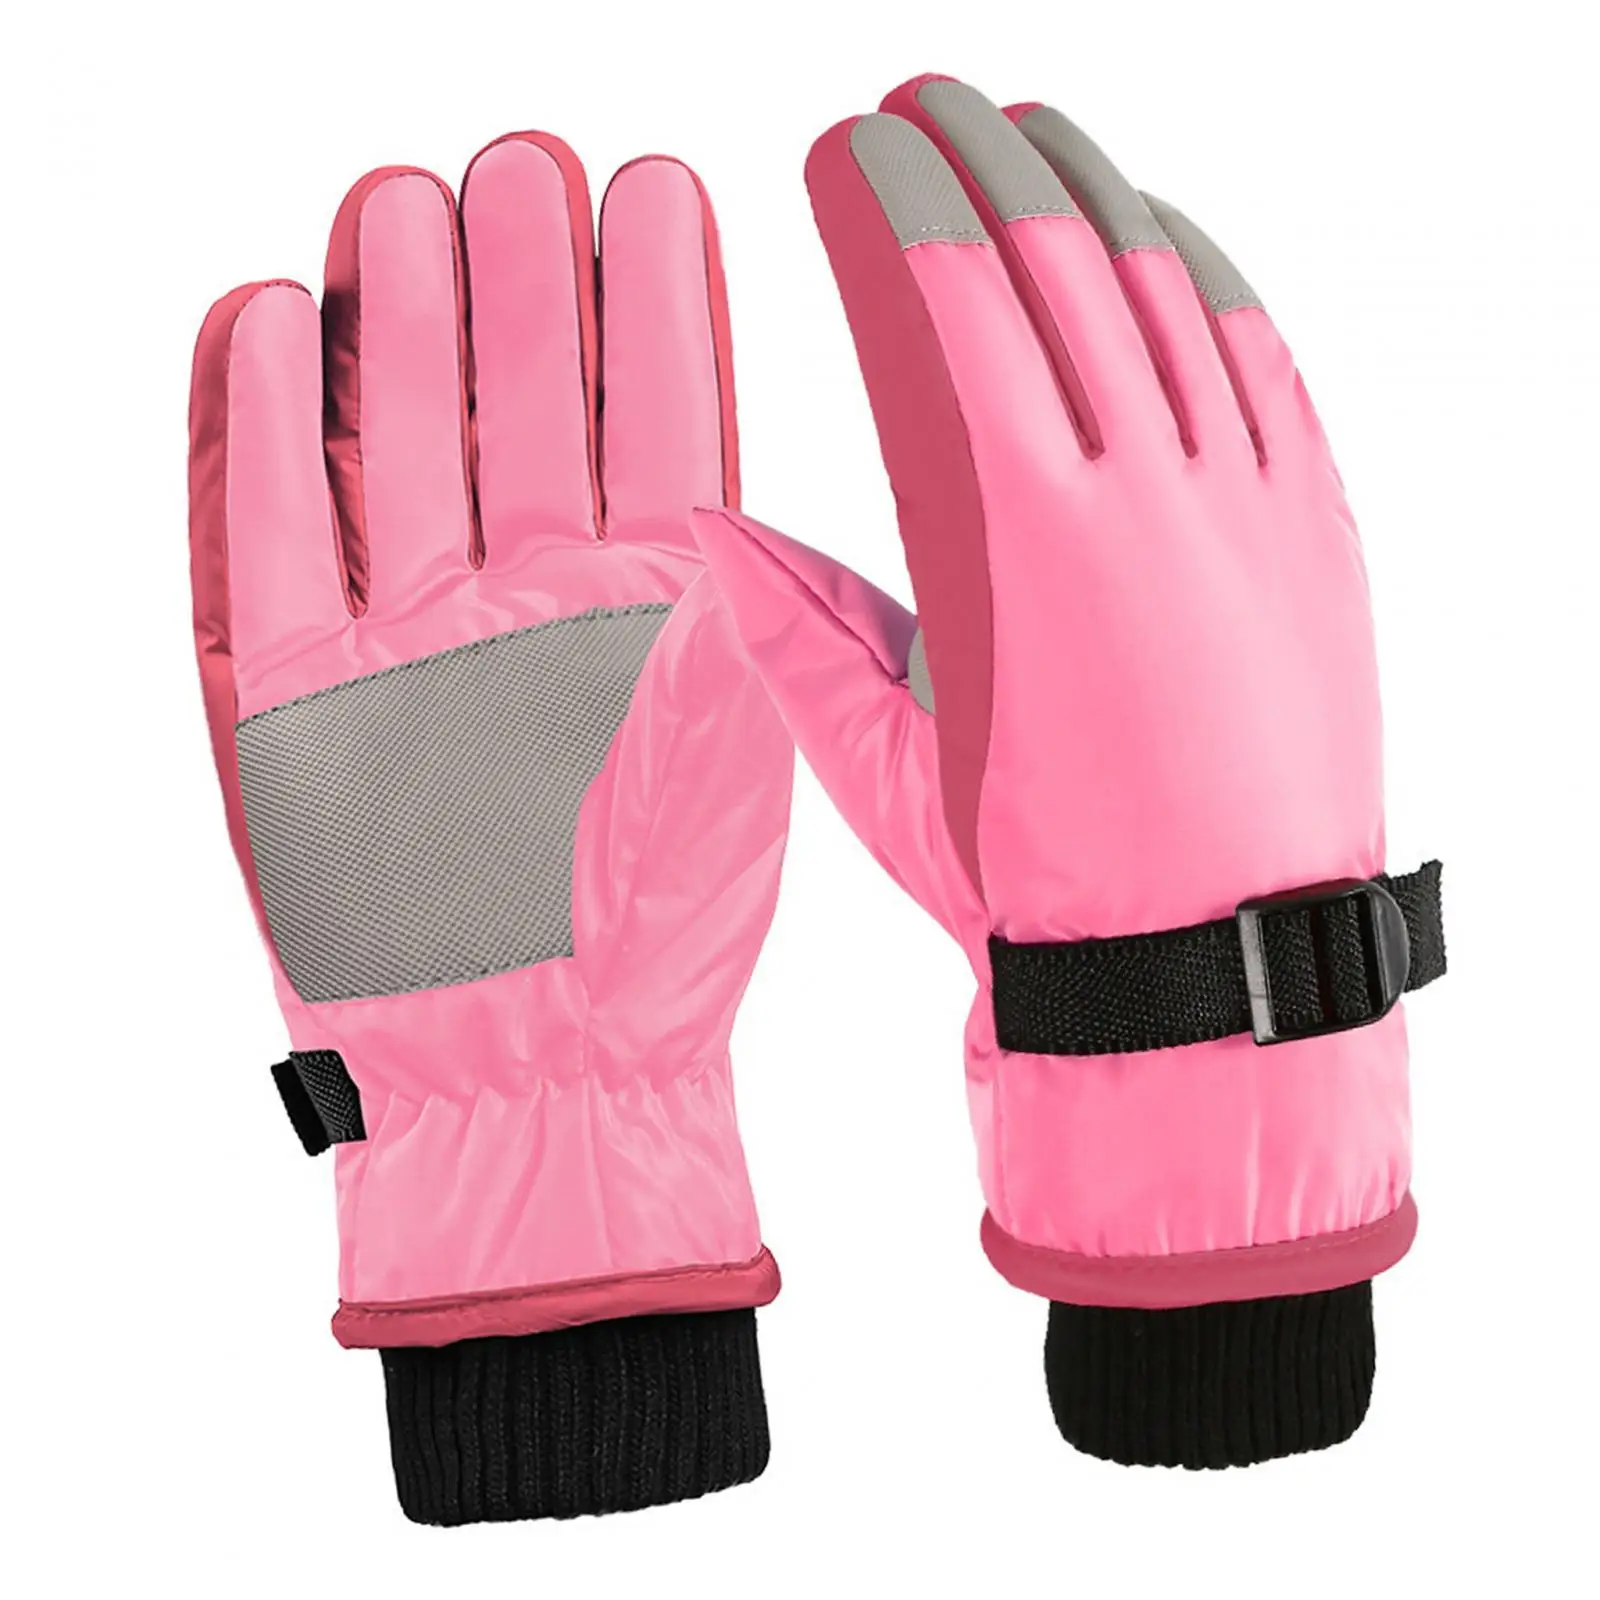 Winter Kids Gloves Mittens Waterproof Ski Gloves Gloves for Cold Weather for Children Girls Boys Hiking Snowboarding Skiing